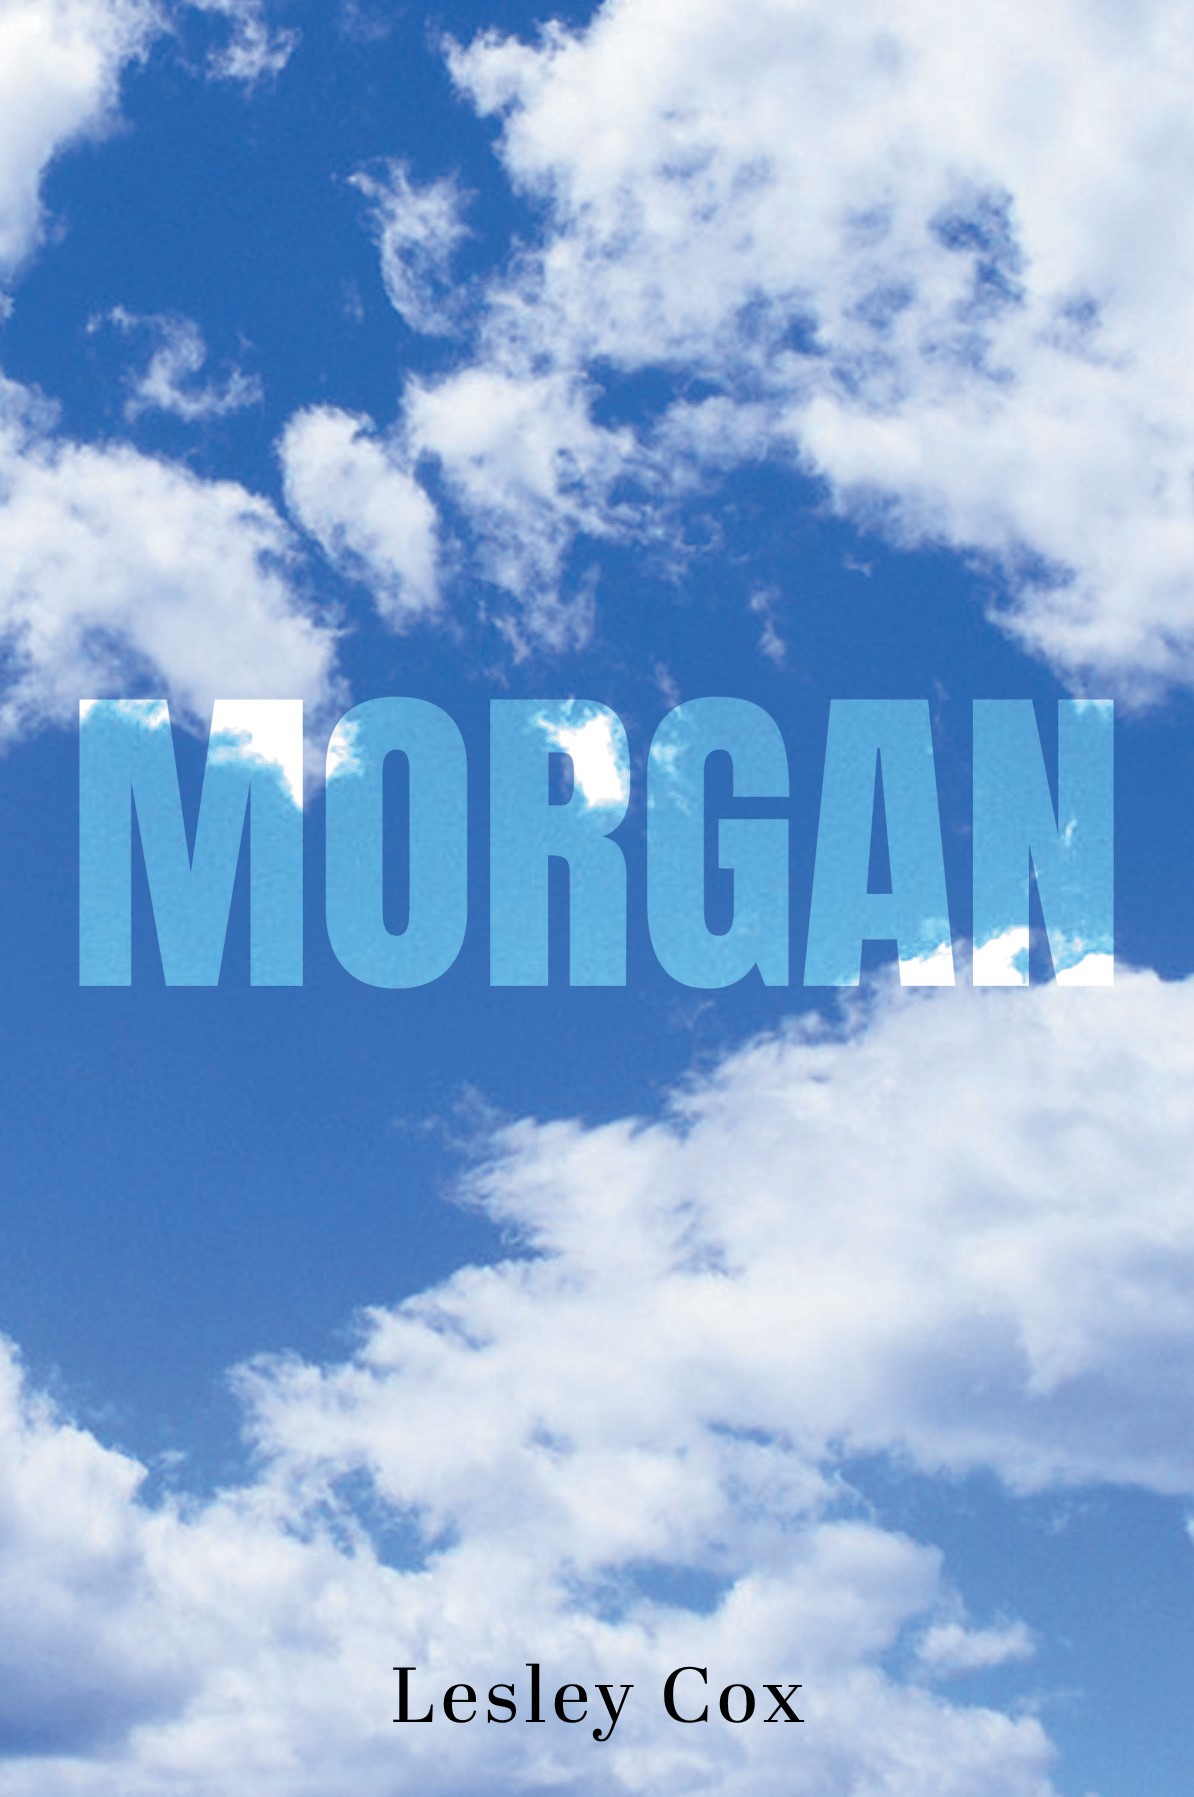 Morgan/